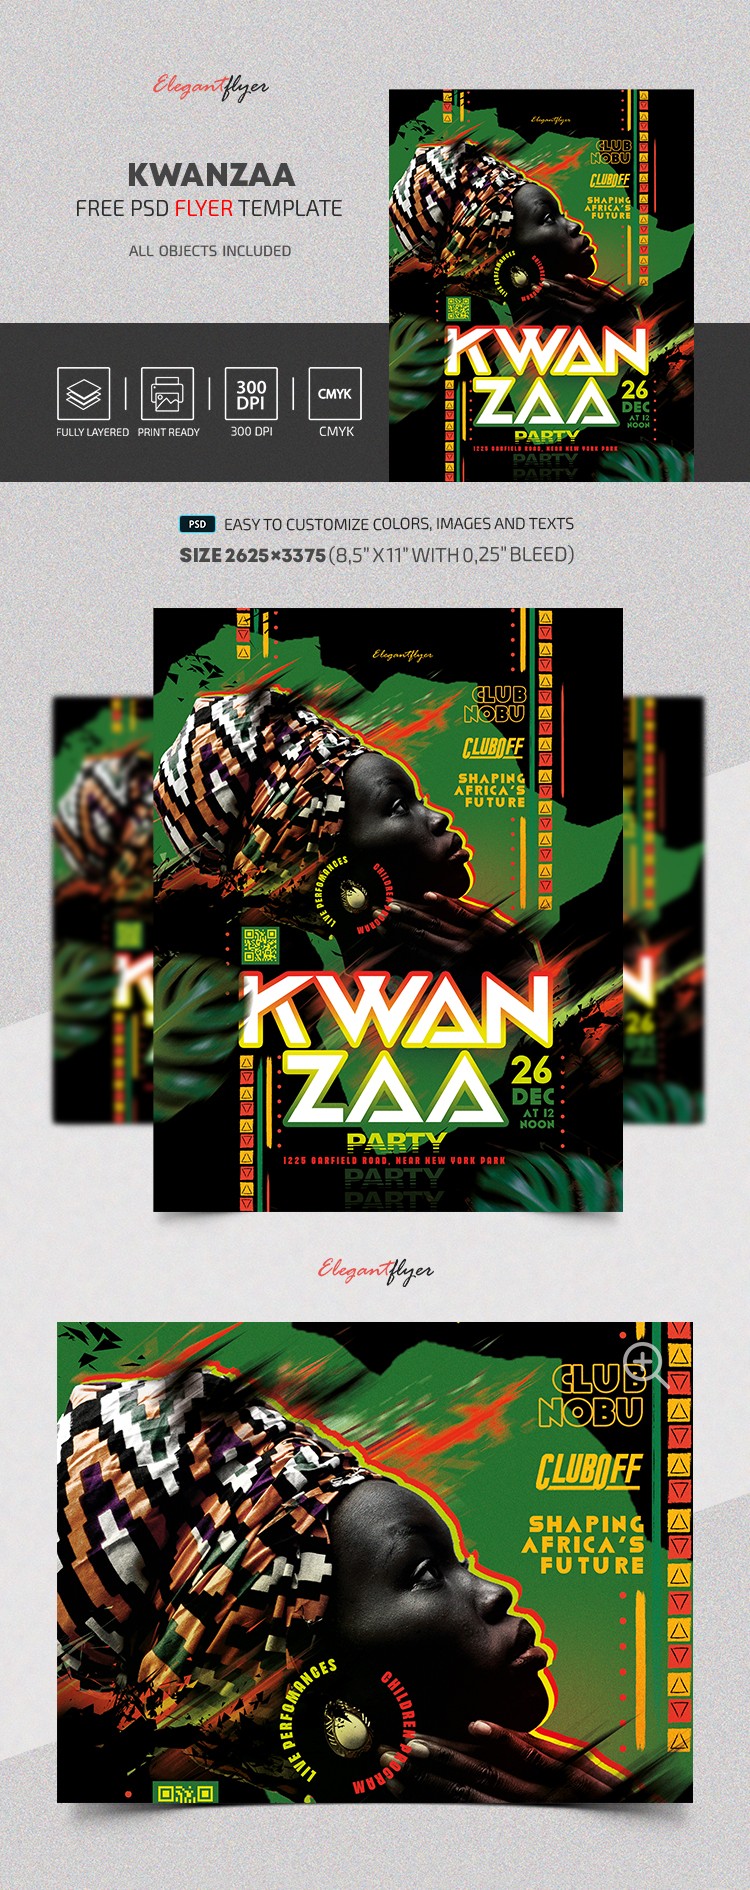 Kwanzaa Flyer by ElegantFlyer